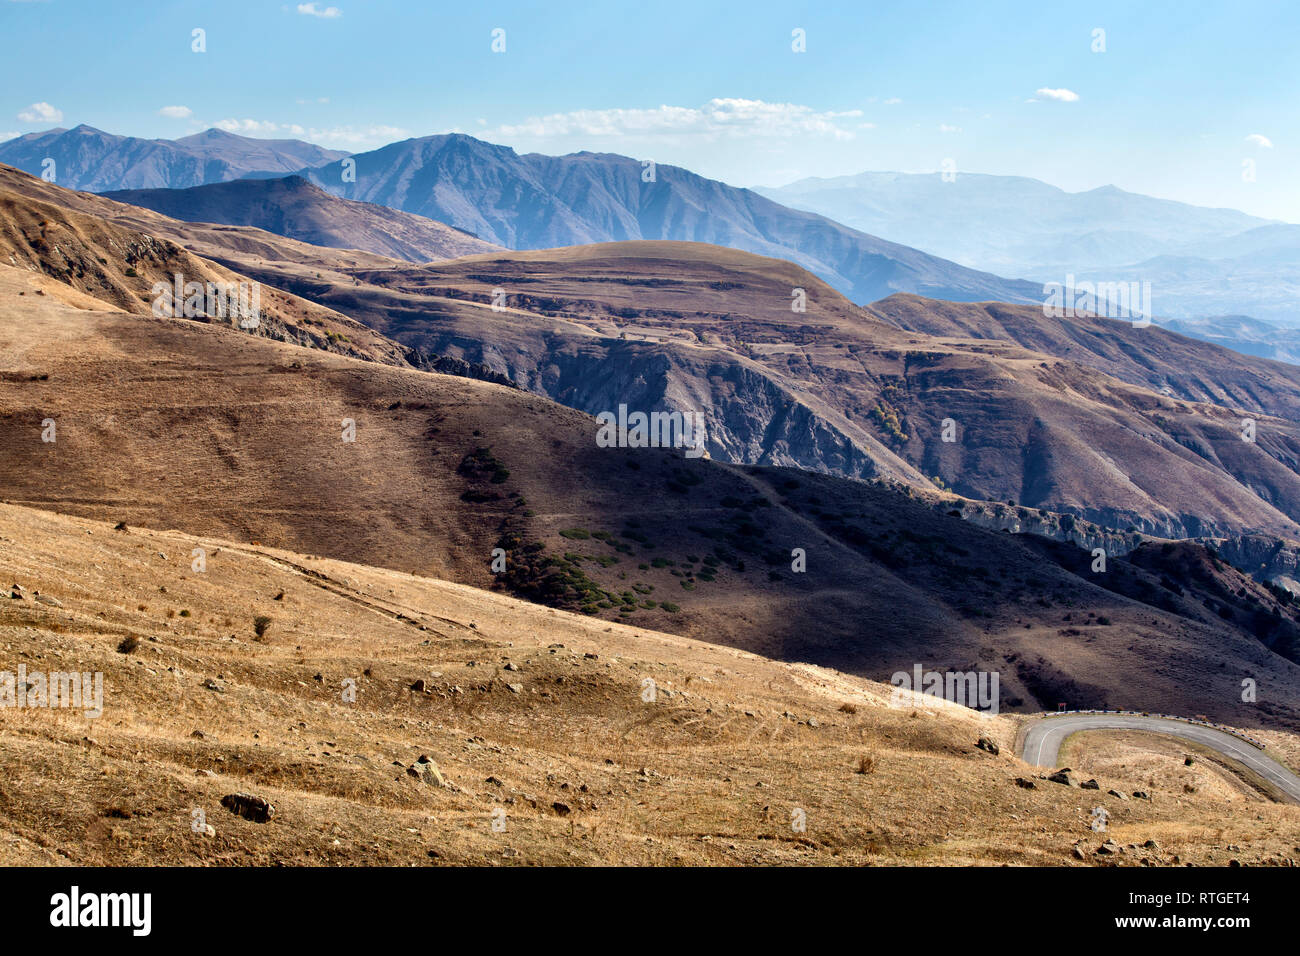 Mountain valley landscape, Martuni, Gegharkunik province, Armenia Stock Photo